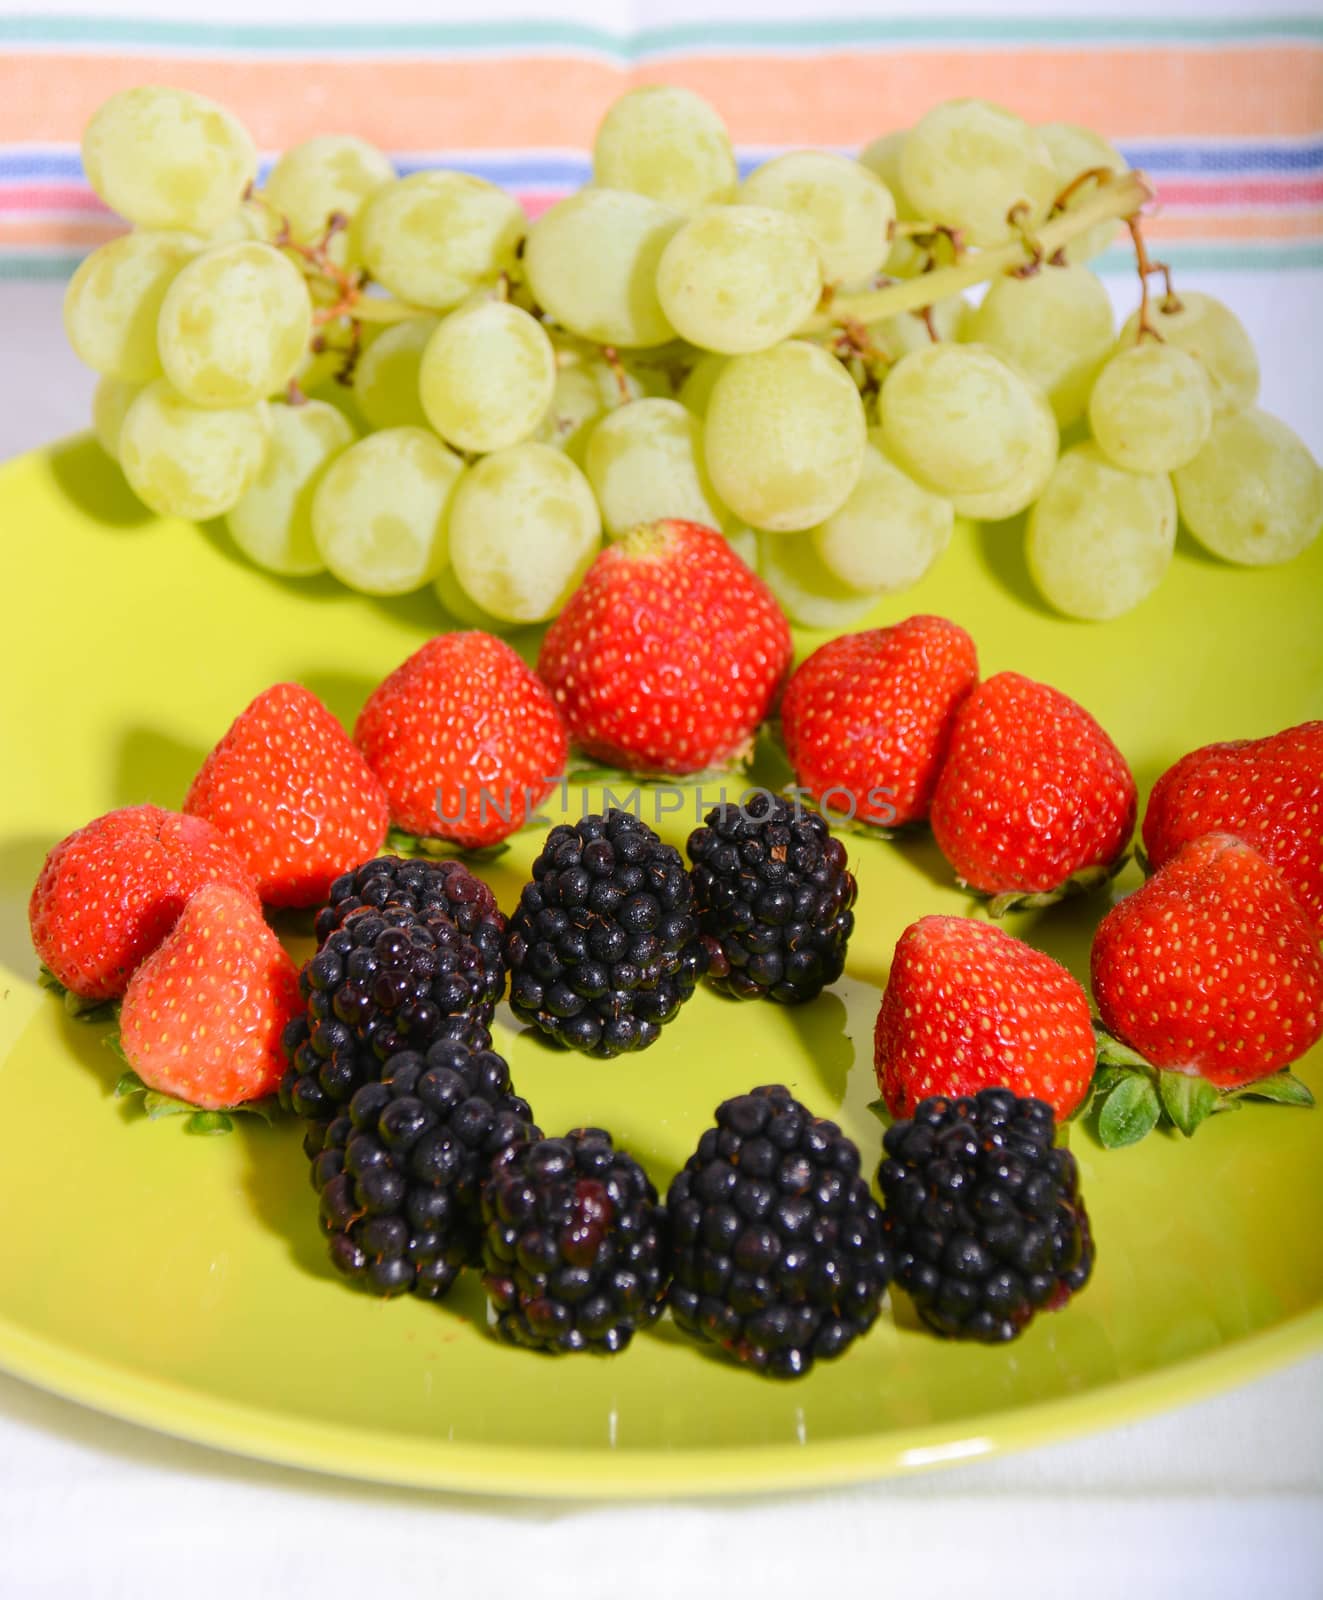 healthy fruits 13 by iacobino